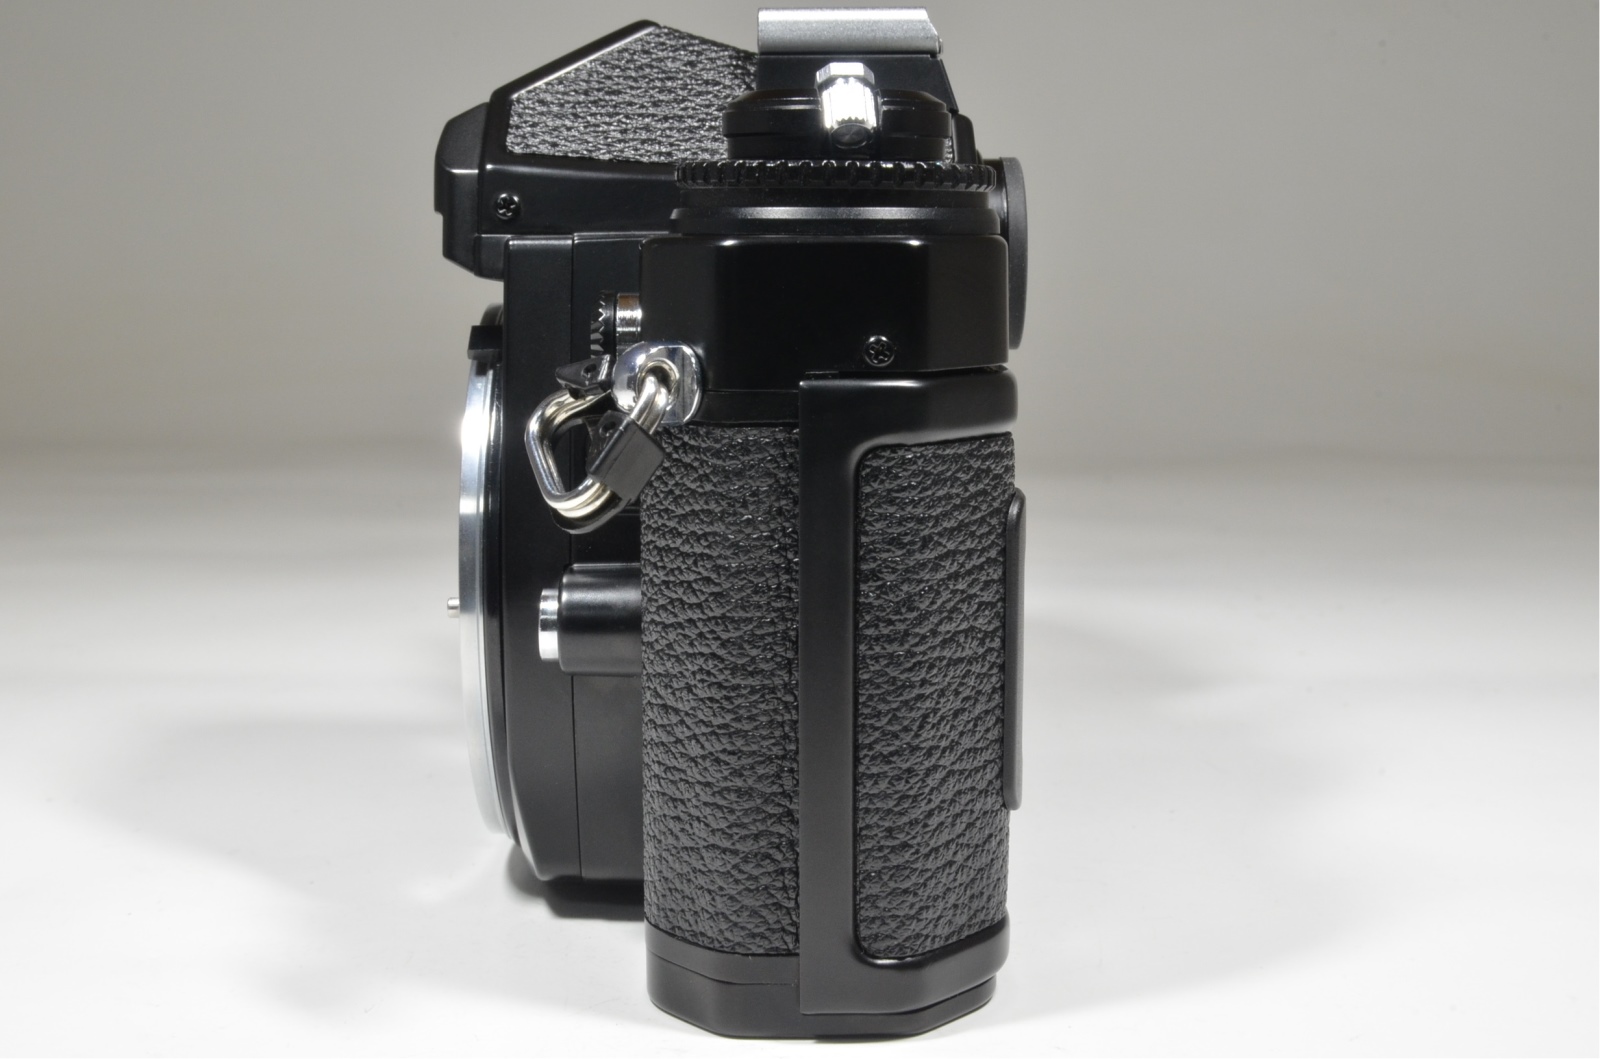 nikon fm3a 35mm film camera black with cf-27